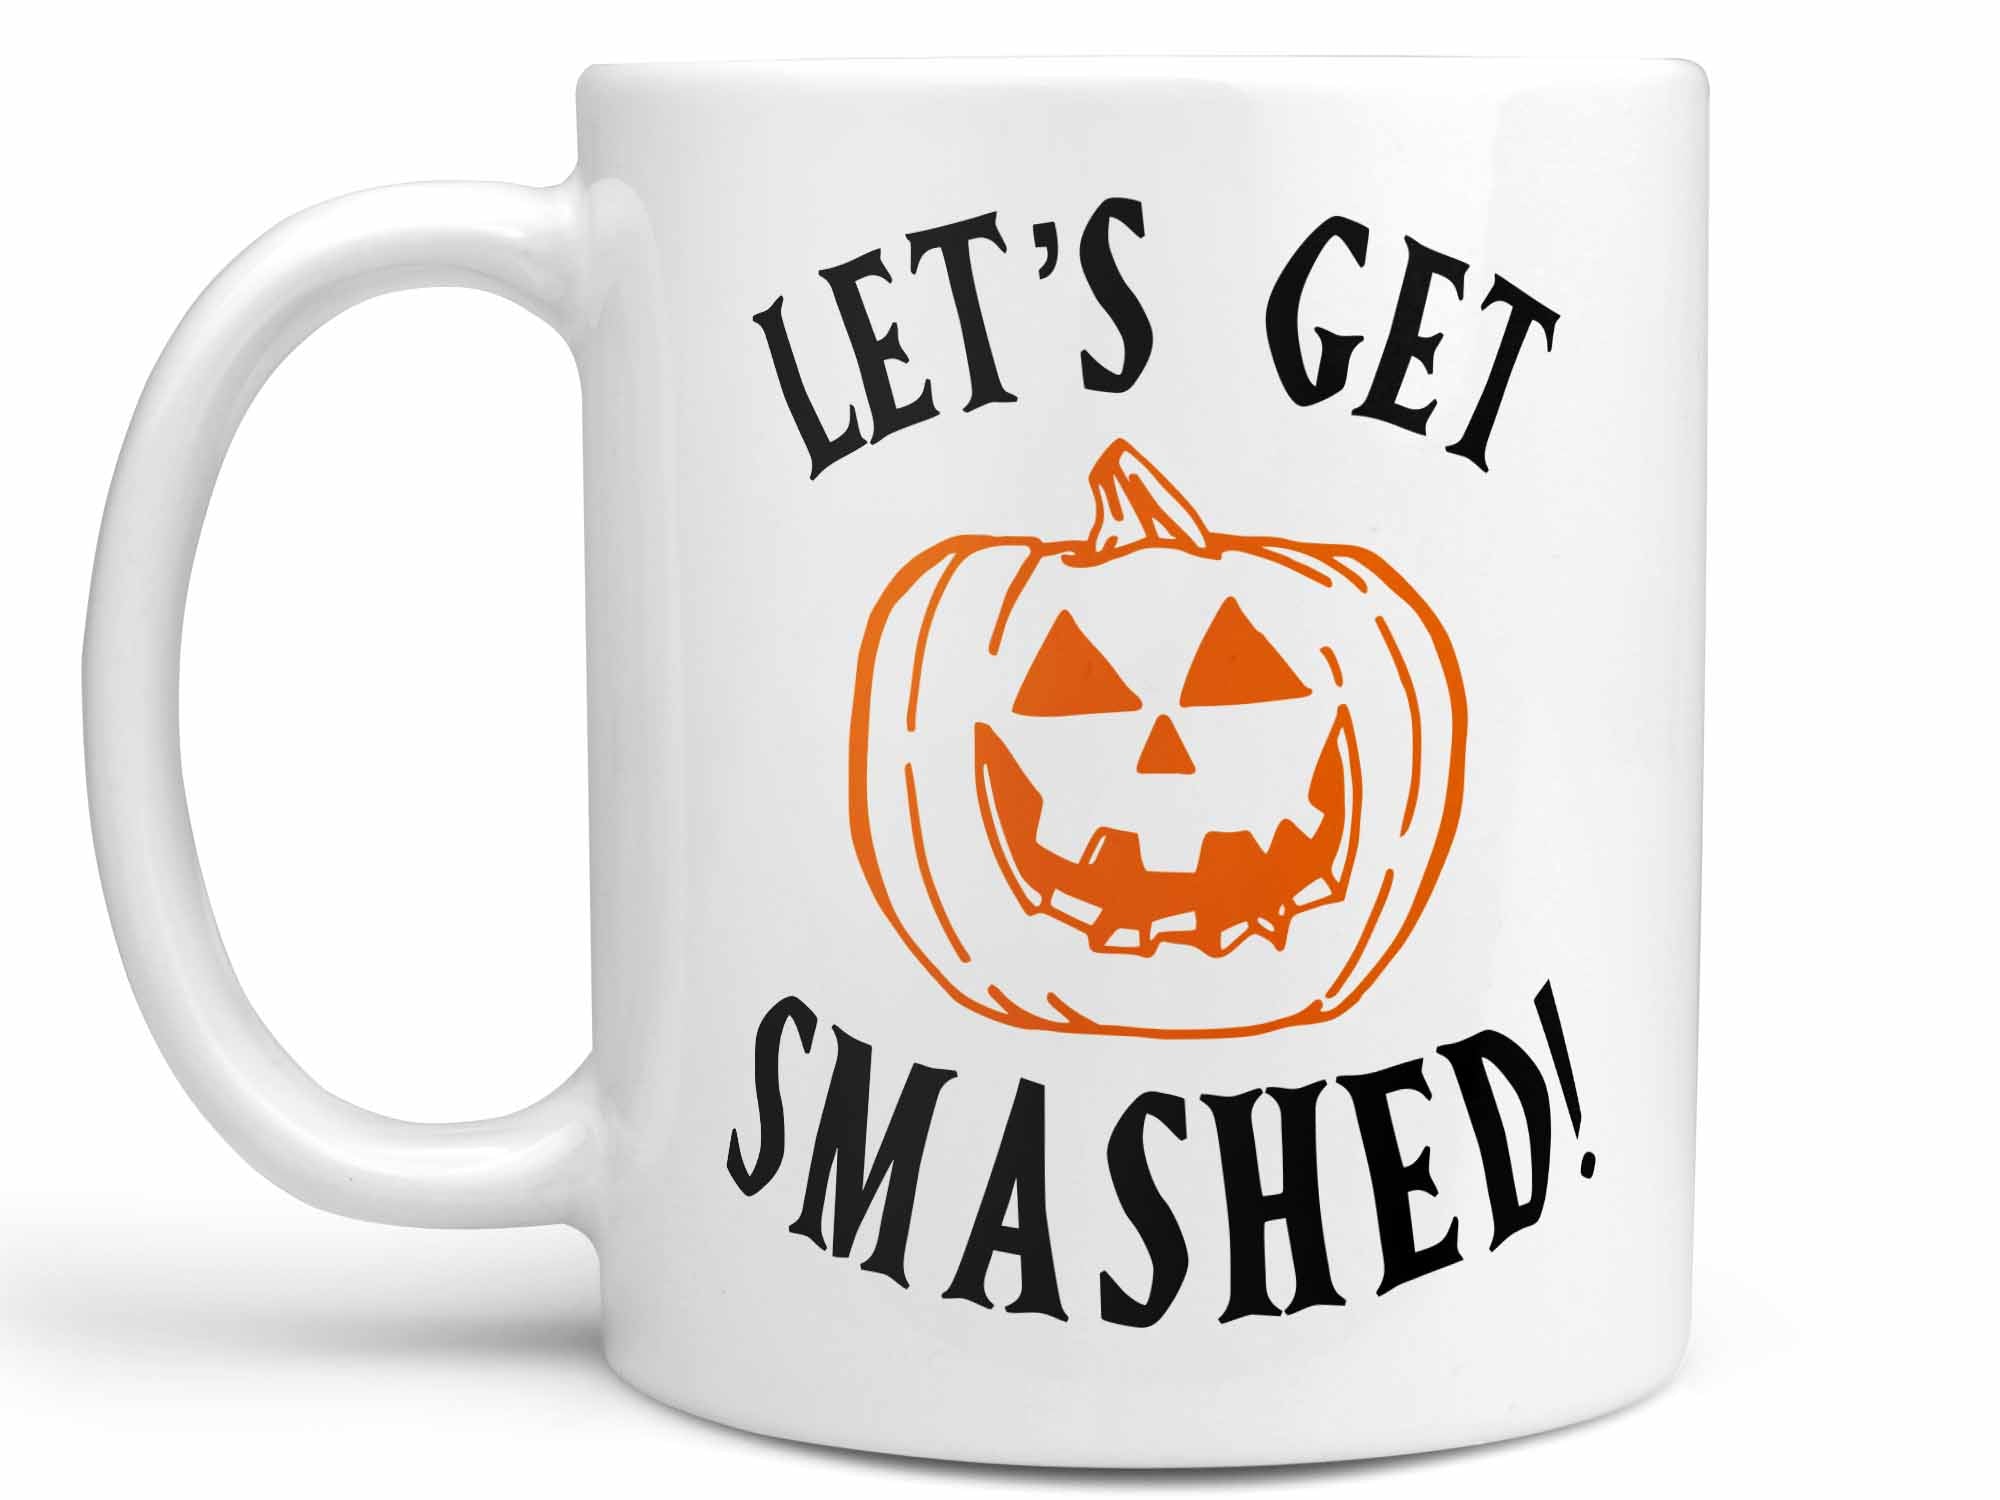 Let's Get Smashed Coffee Mug,Coffee Mugs Never Lie,Coffee Mug